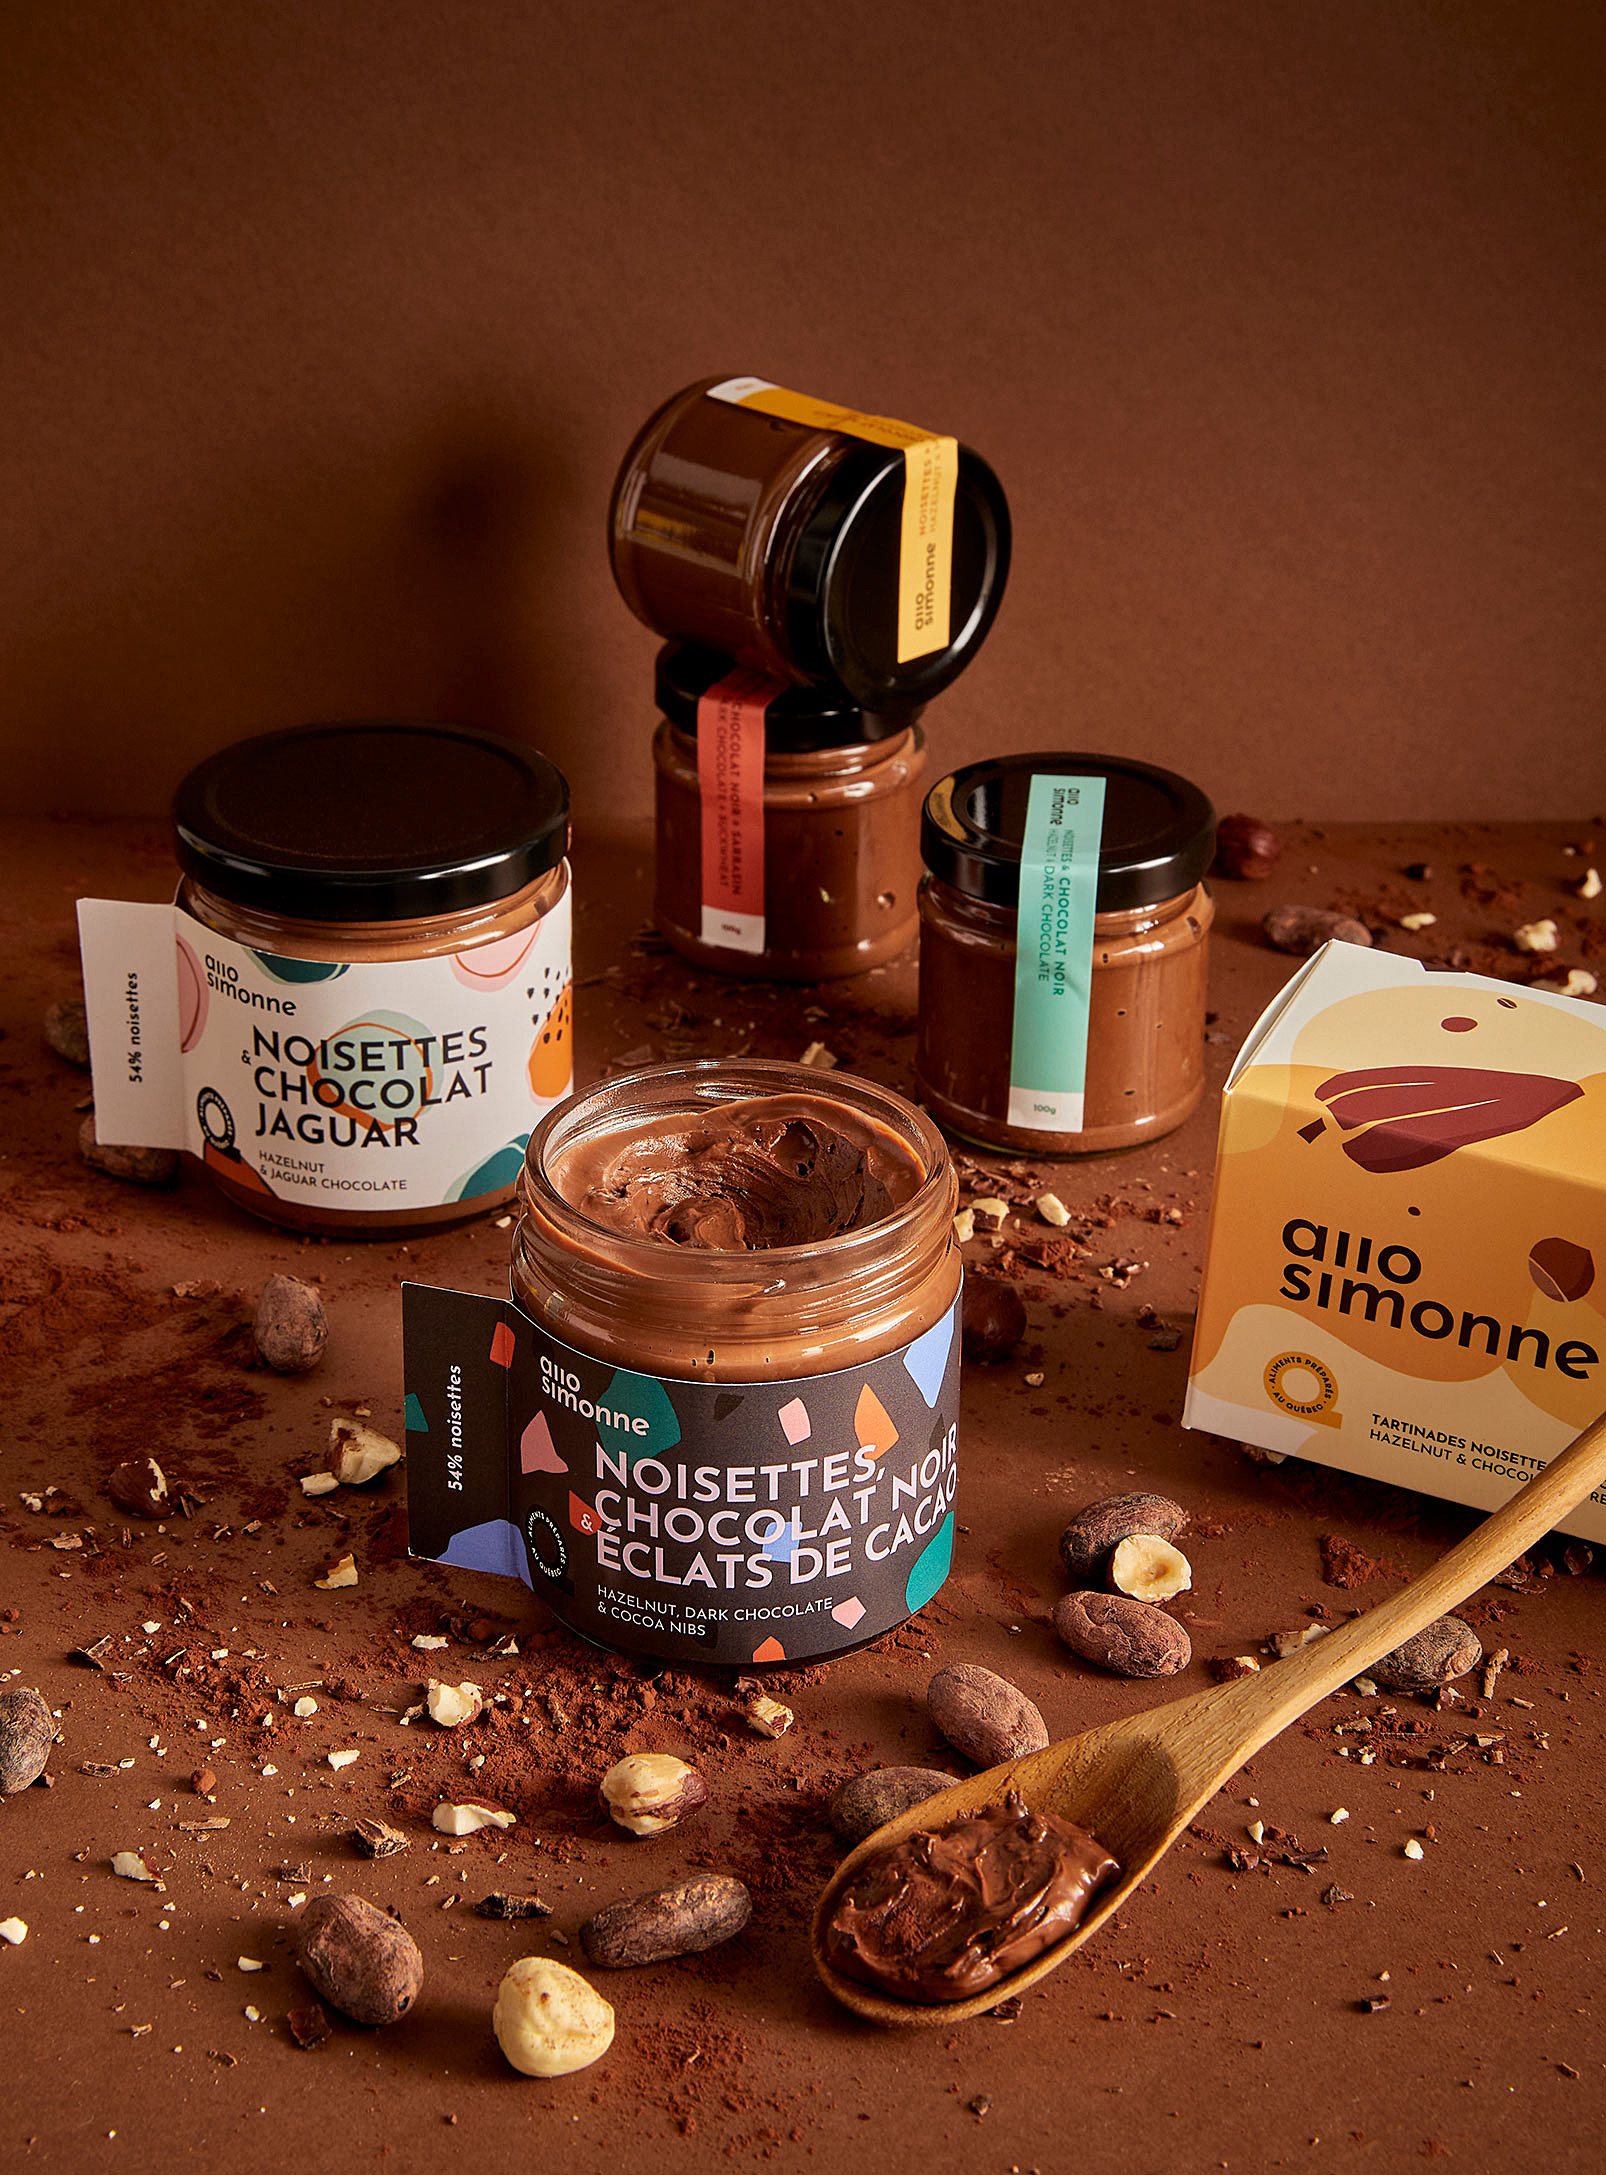 Allo Simonne - Hazelnut and chocolate spread discovery set 5 flavours